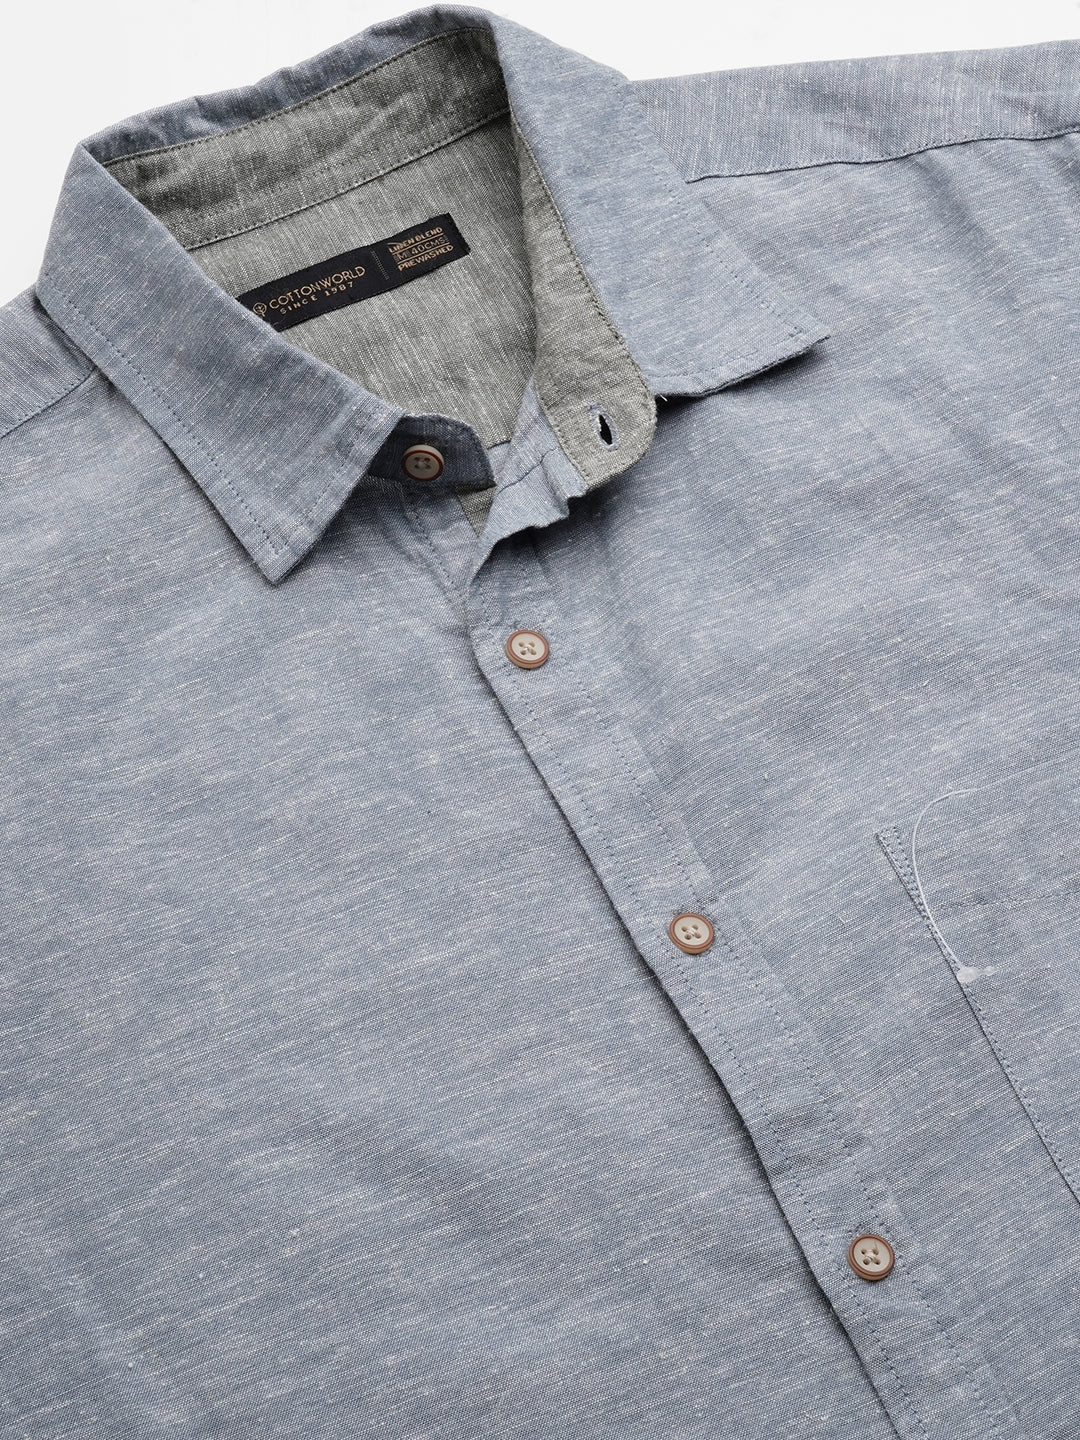 Buy Mens Cotton Linen Casual Wear Regular Fit Shirts|Cottonworld